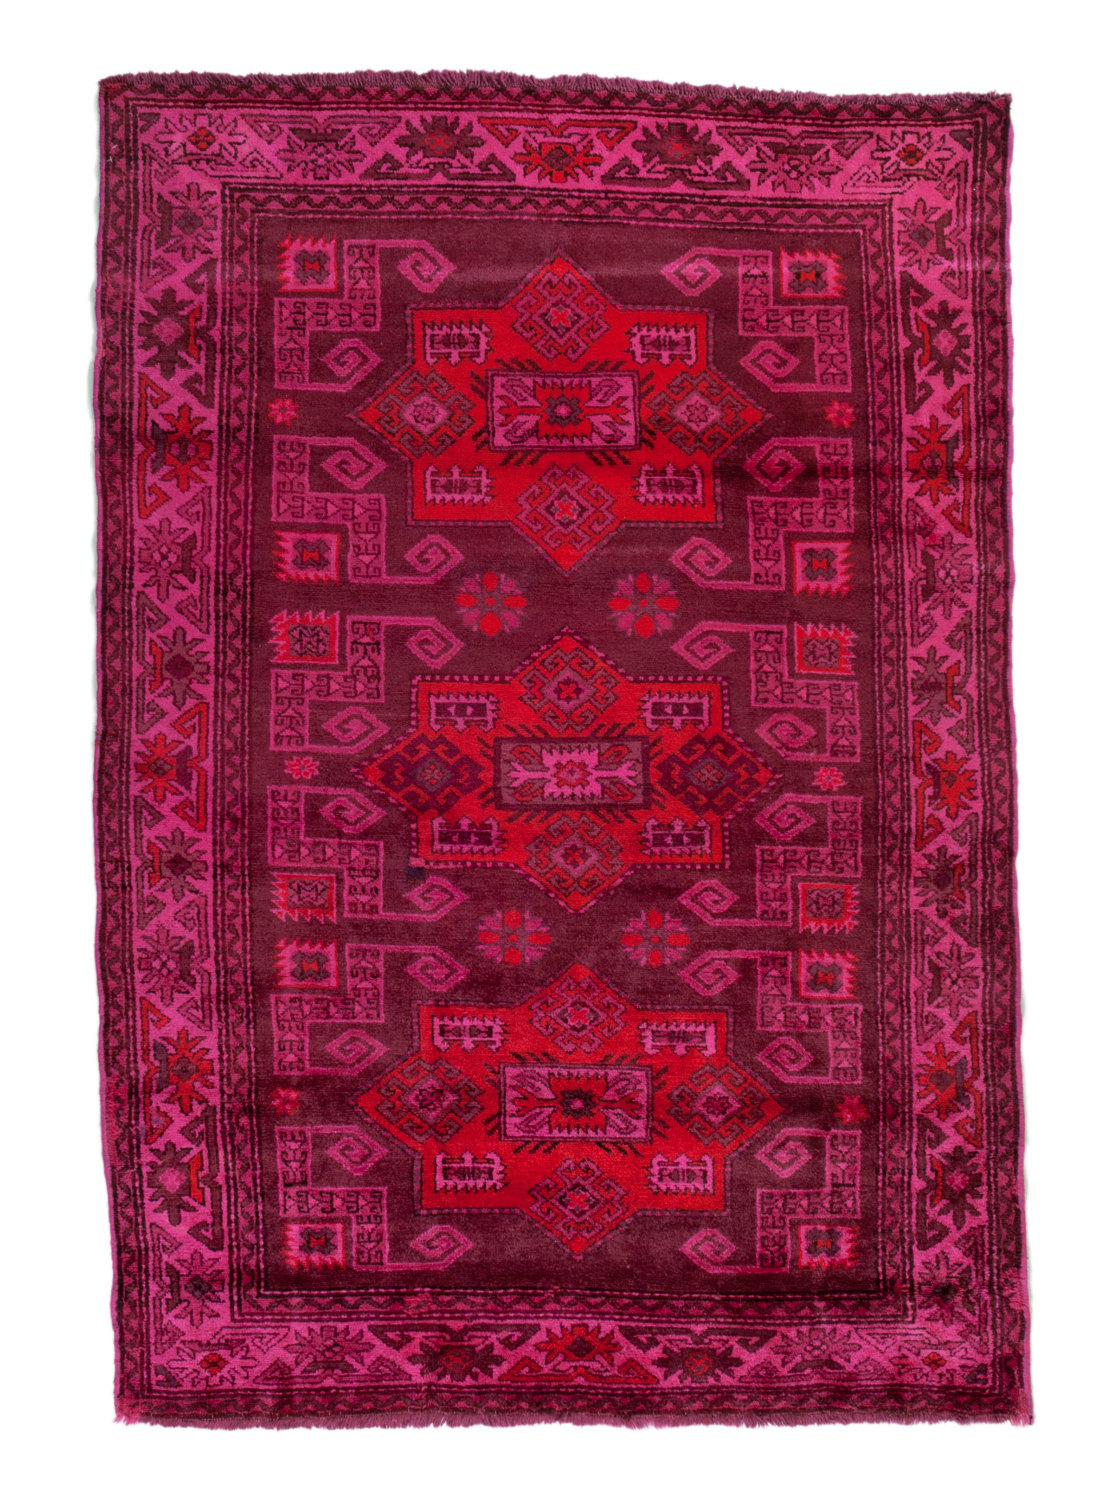 Hot Pink 4x6 Overdyed Vintage Kazak Rug 2645